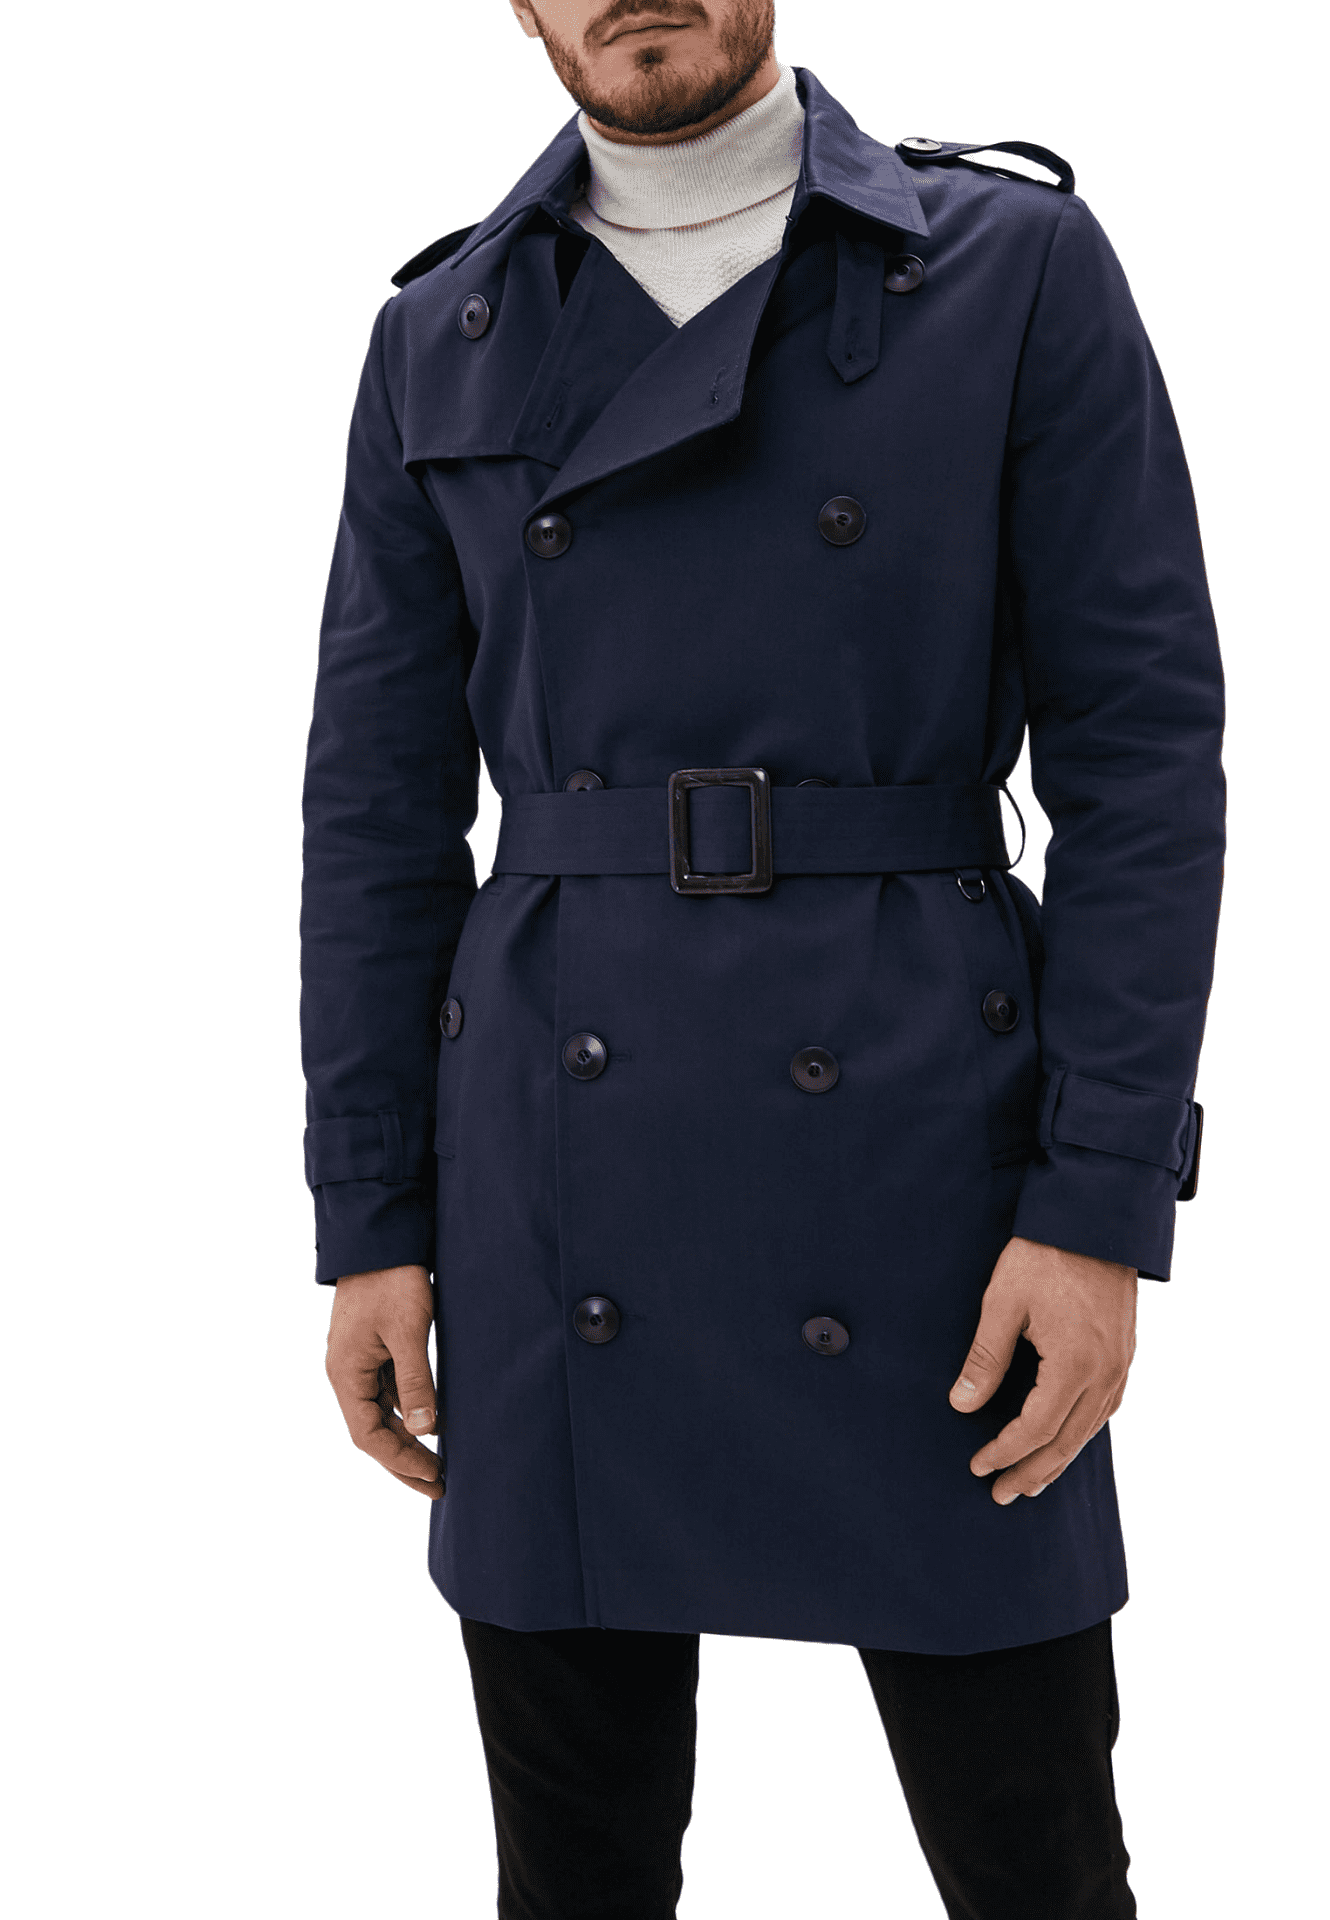 DASTI - Mens Trench Coat for Men Outdoor Apparel Rain Lightweight ...